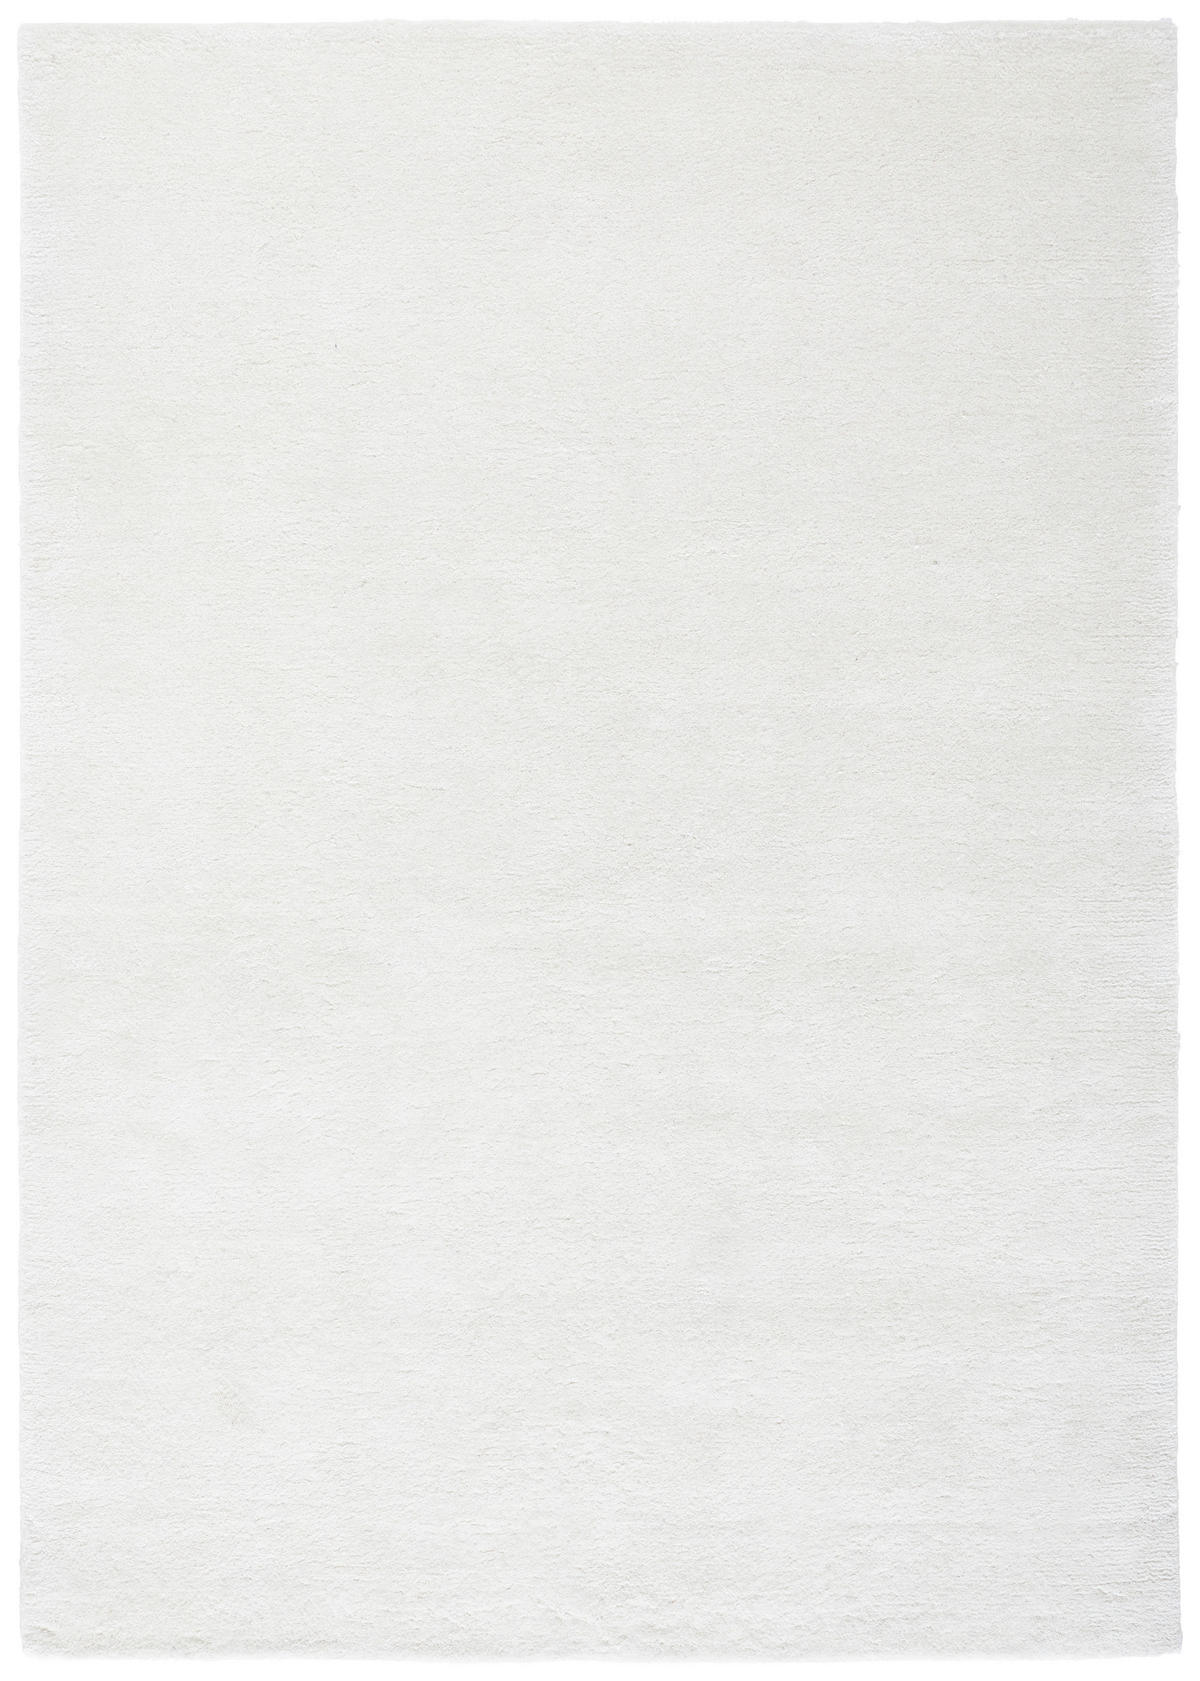 Wollteppich 70/140 cm  - Weiß, Natur, Textil (70/140cm) - Linea Natura